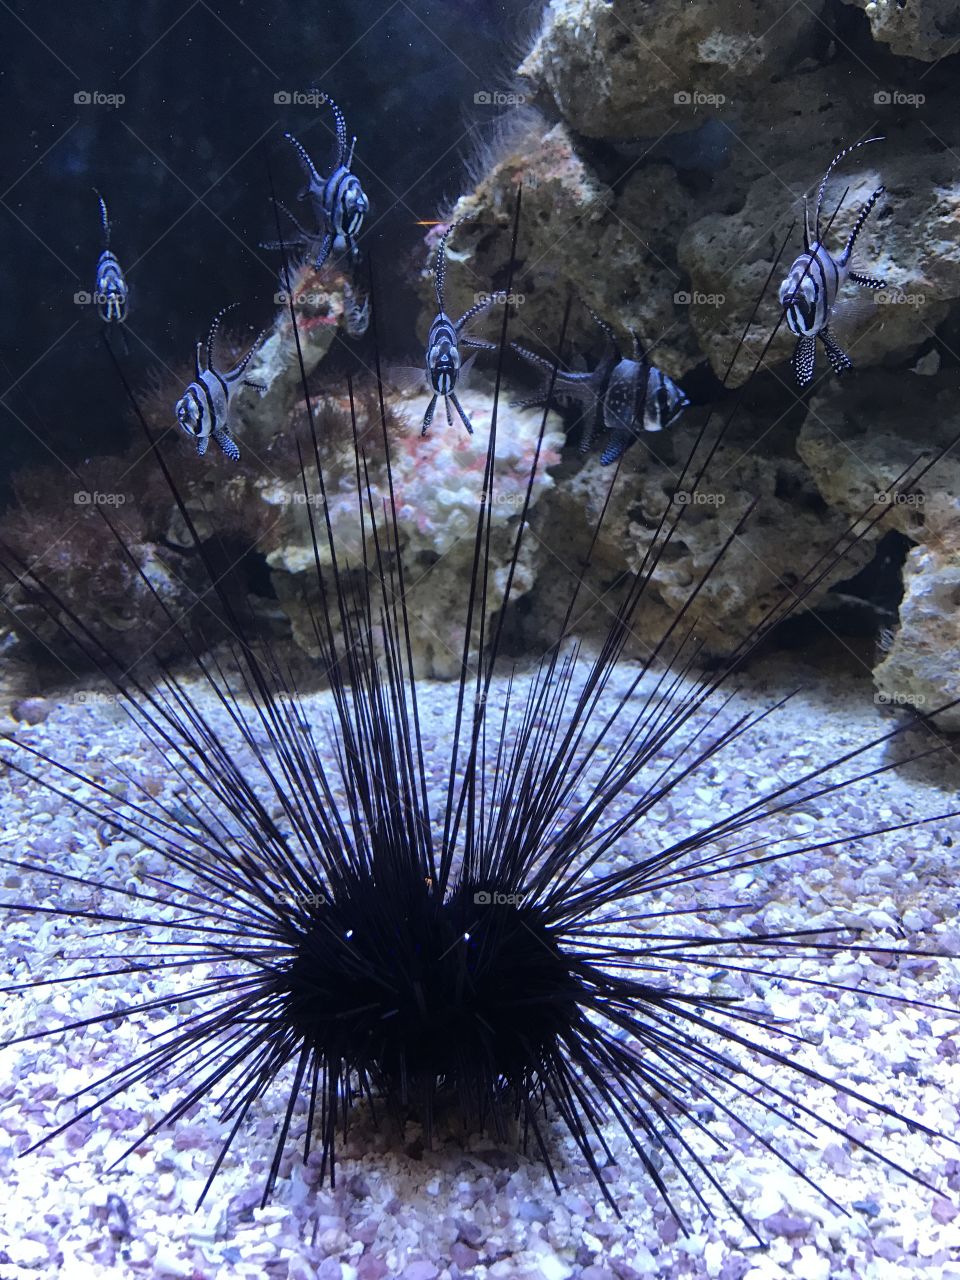 Black Sea Urchin at Pittsburgh Zoo